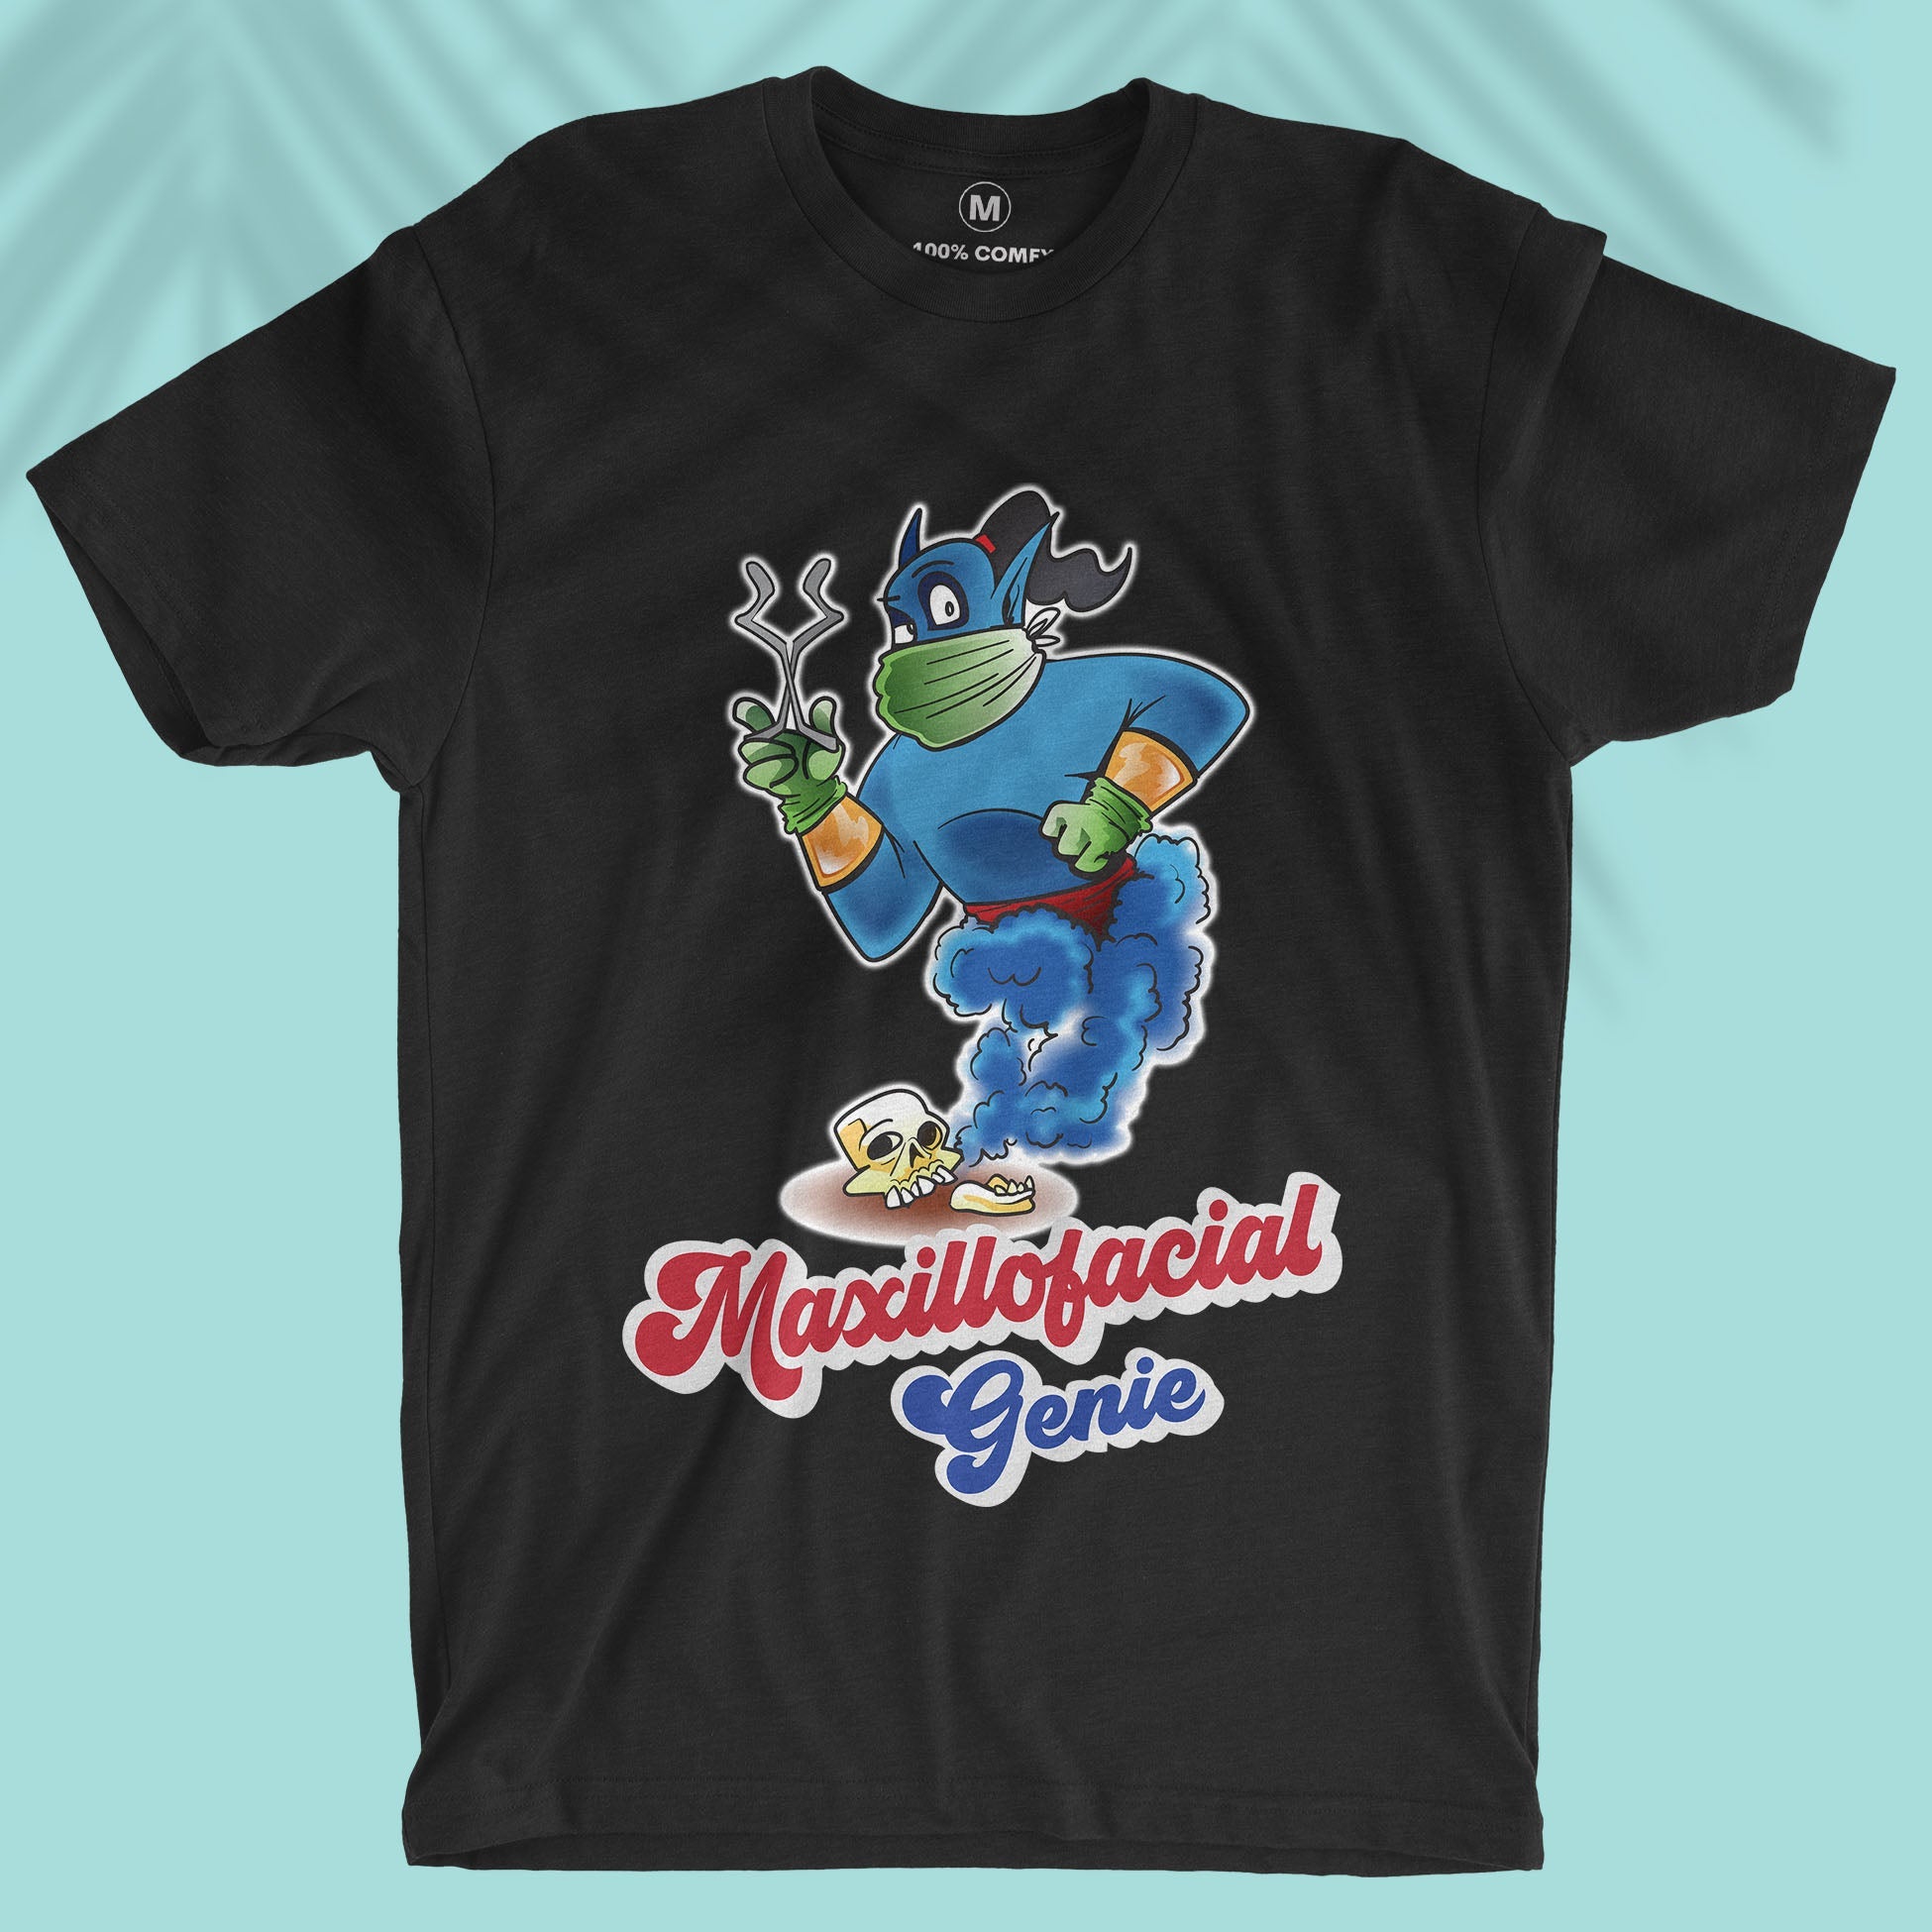 Maxillofacial Genie - Unisex T-shirt